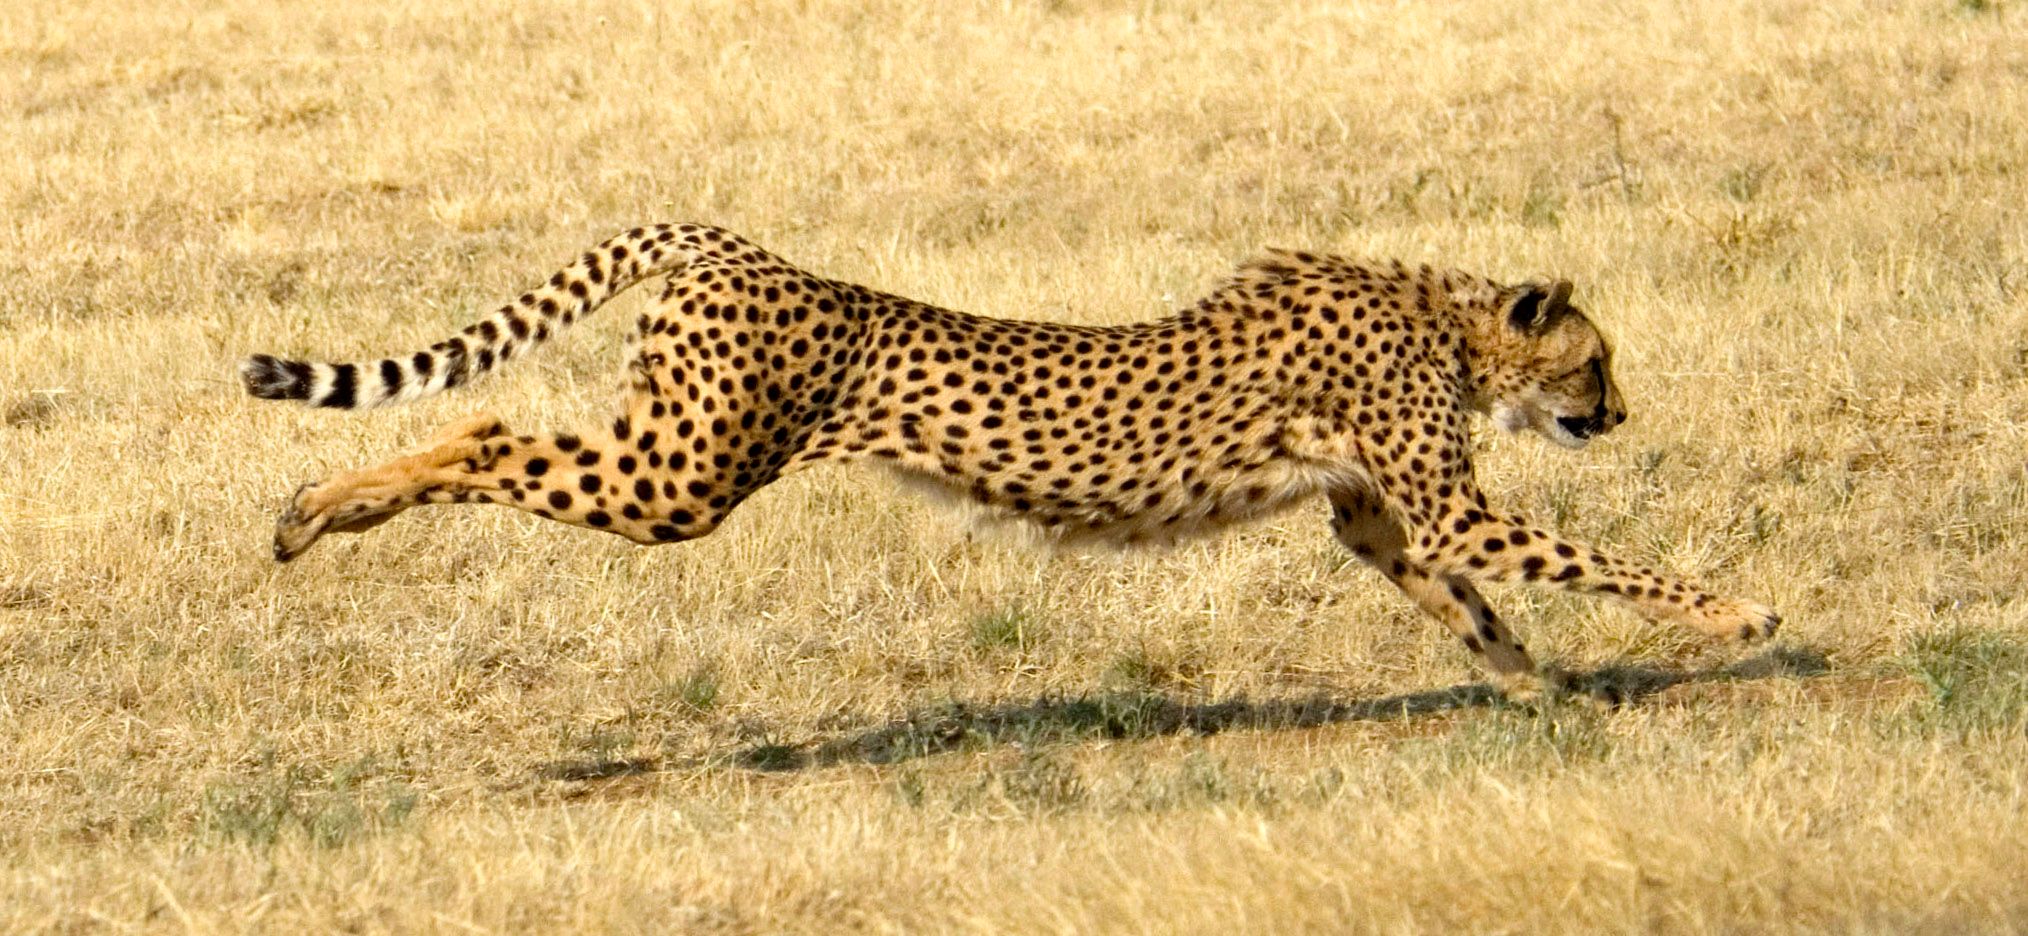 Cheetah Kids - Fast Facts